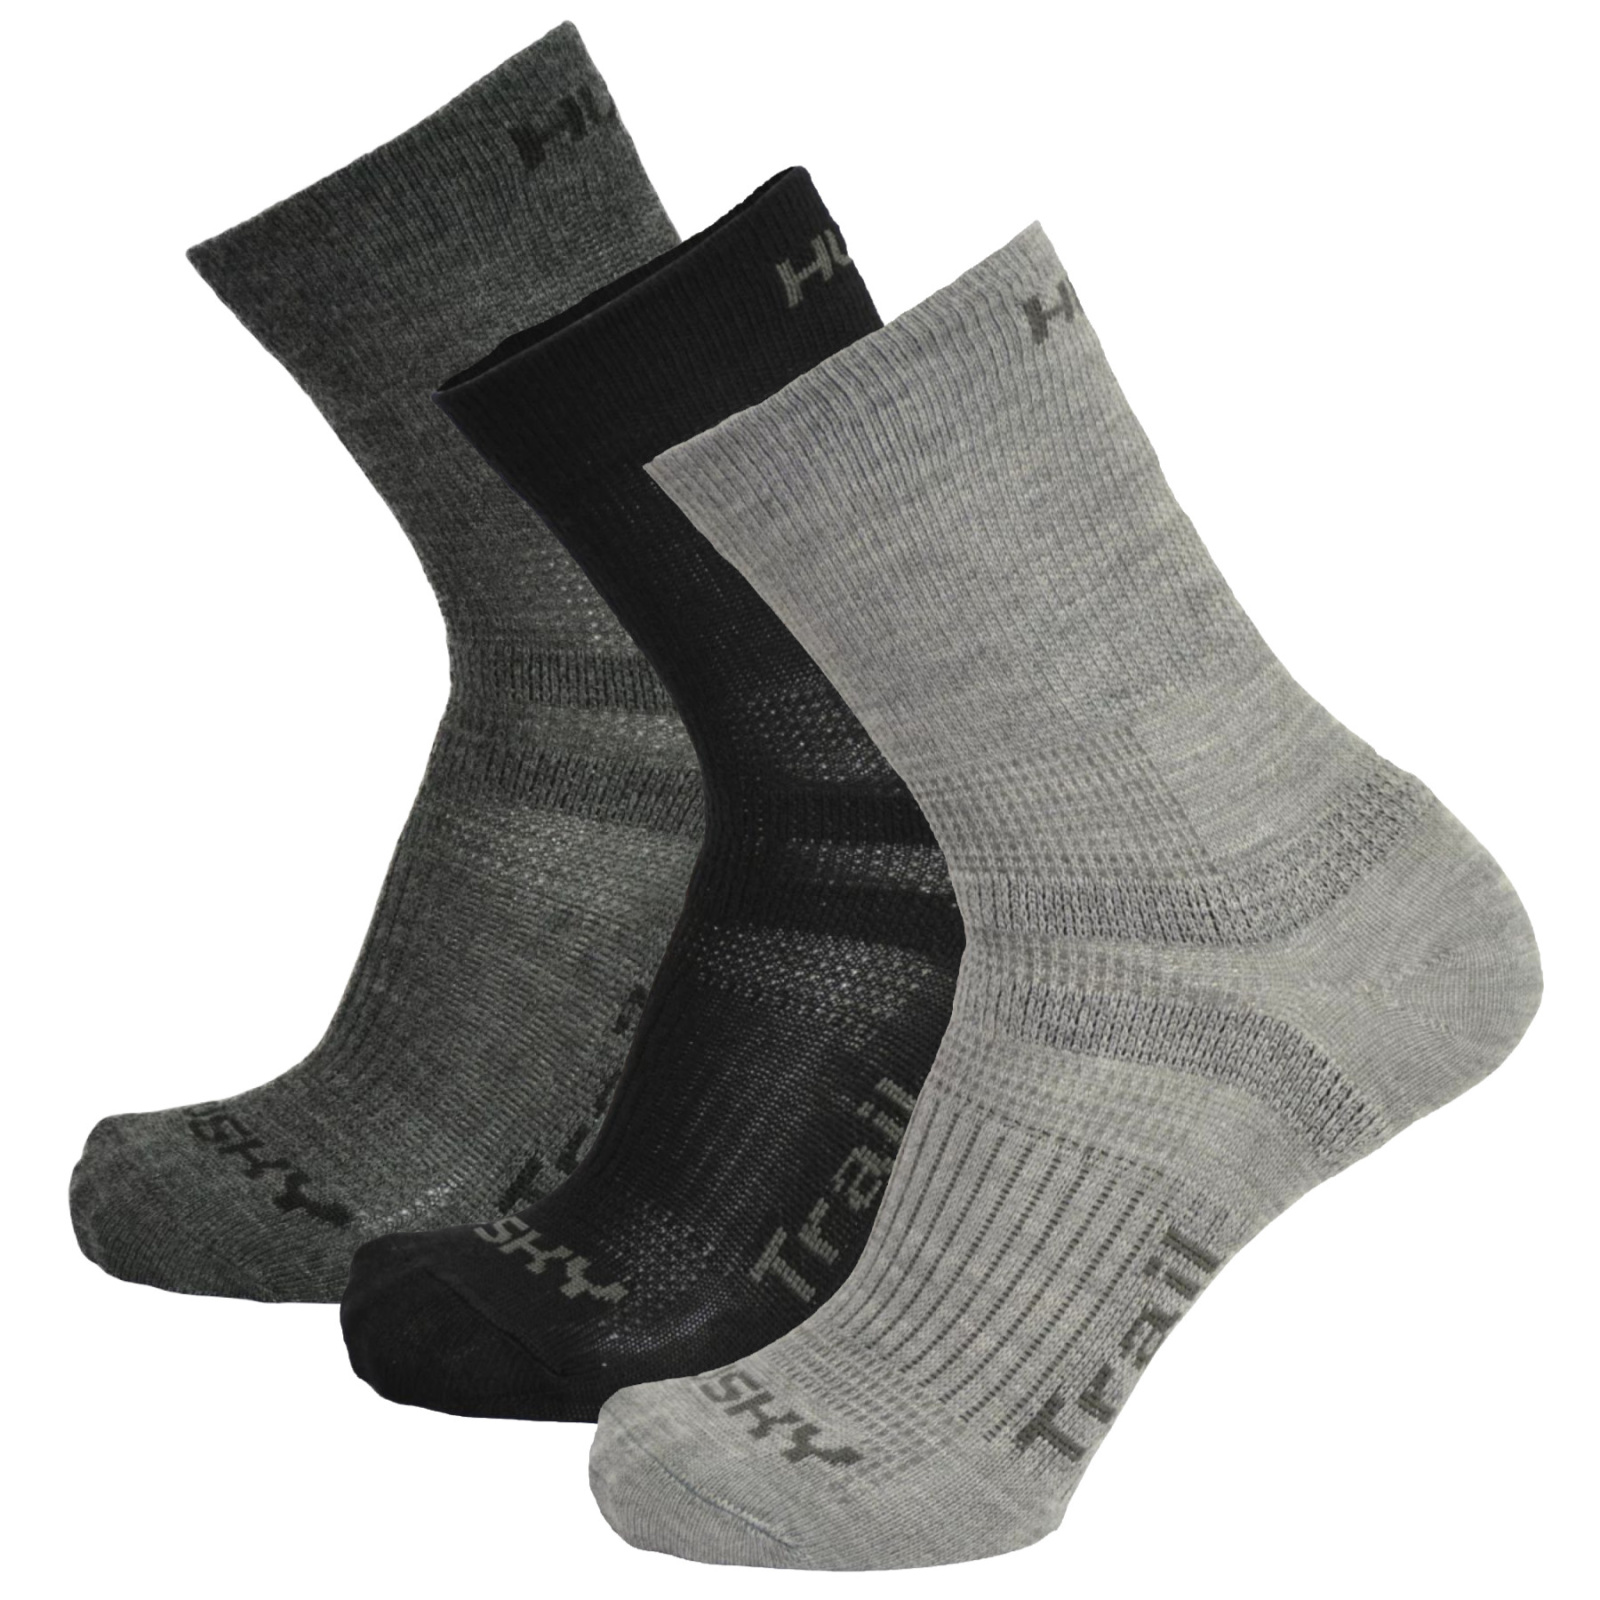 Socks HUSKY Trail 3 pack black/anthracite/light grey